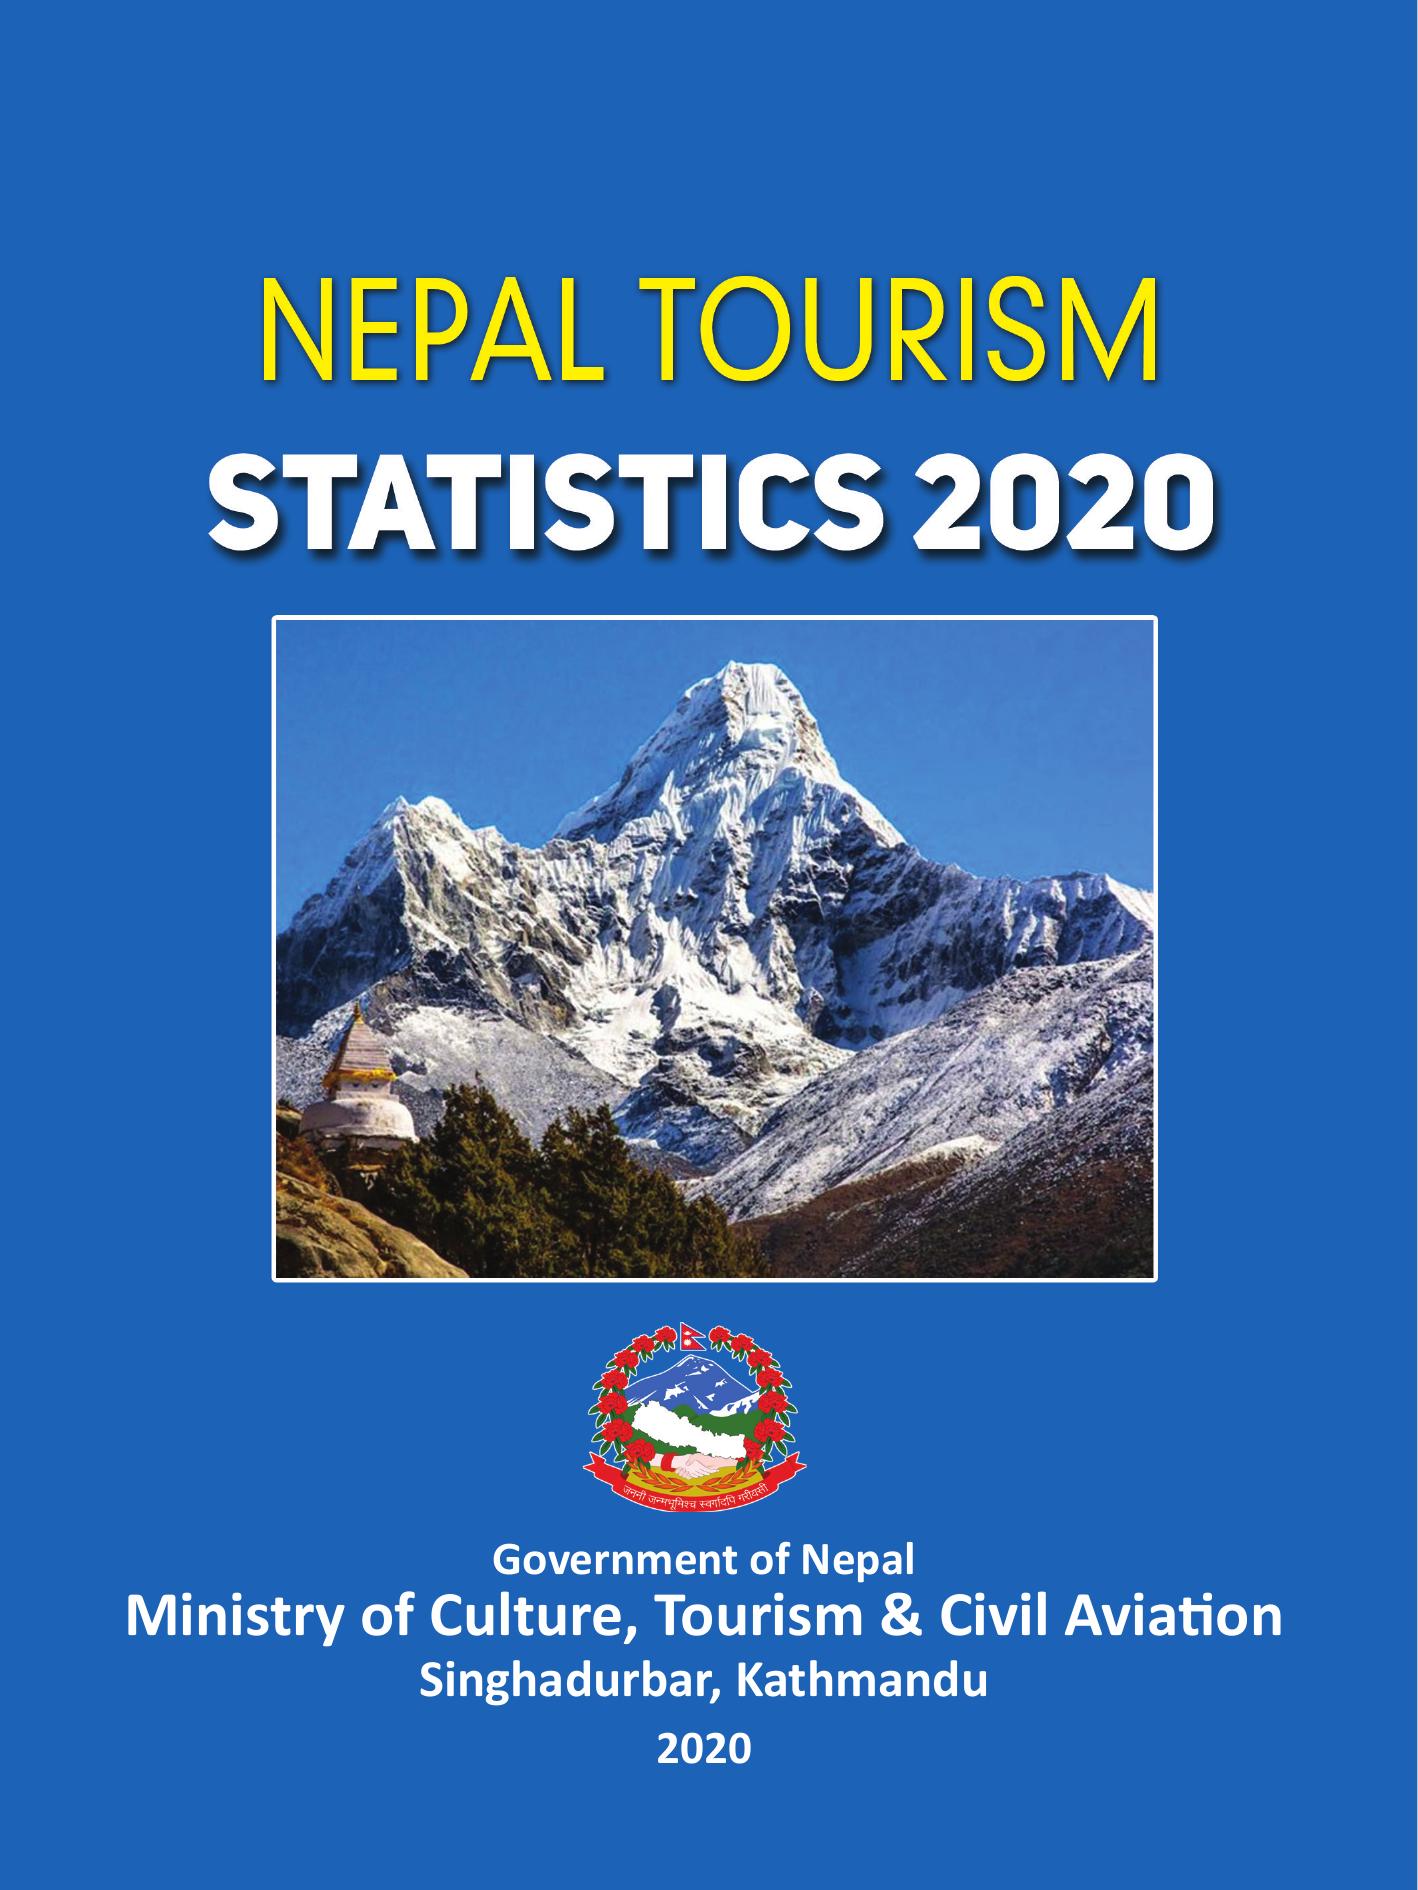 tourism statistics in nepal